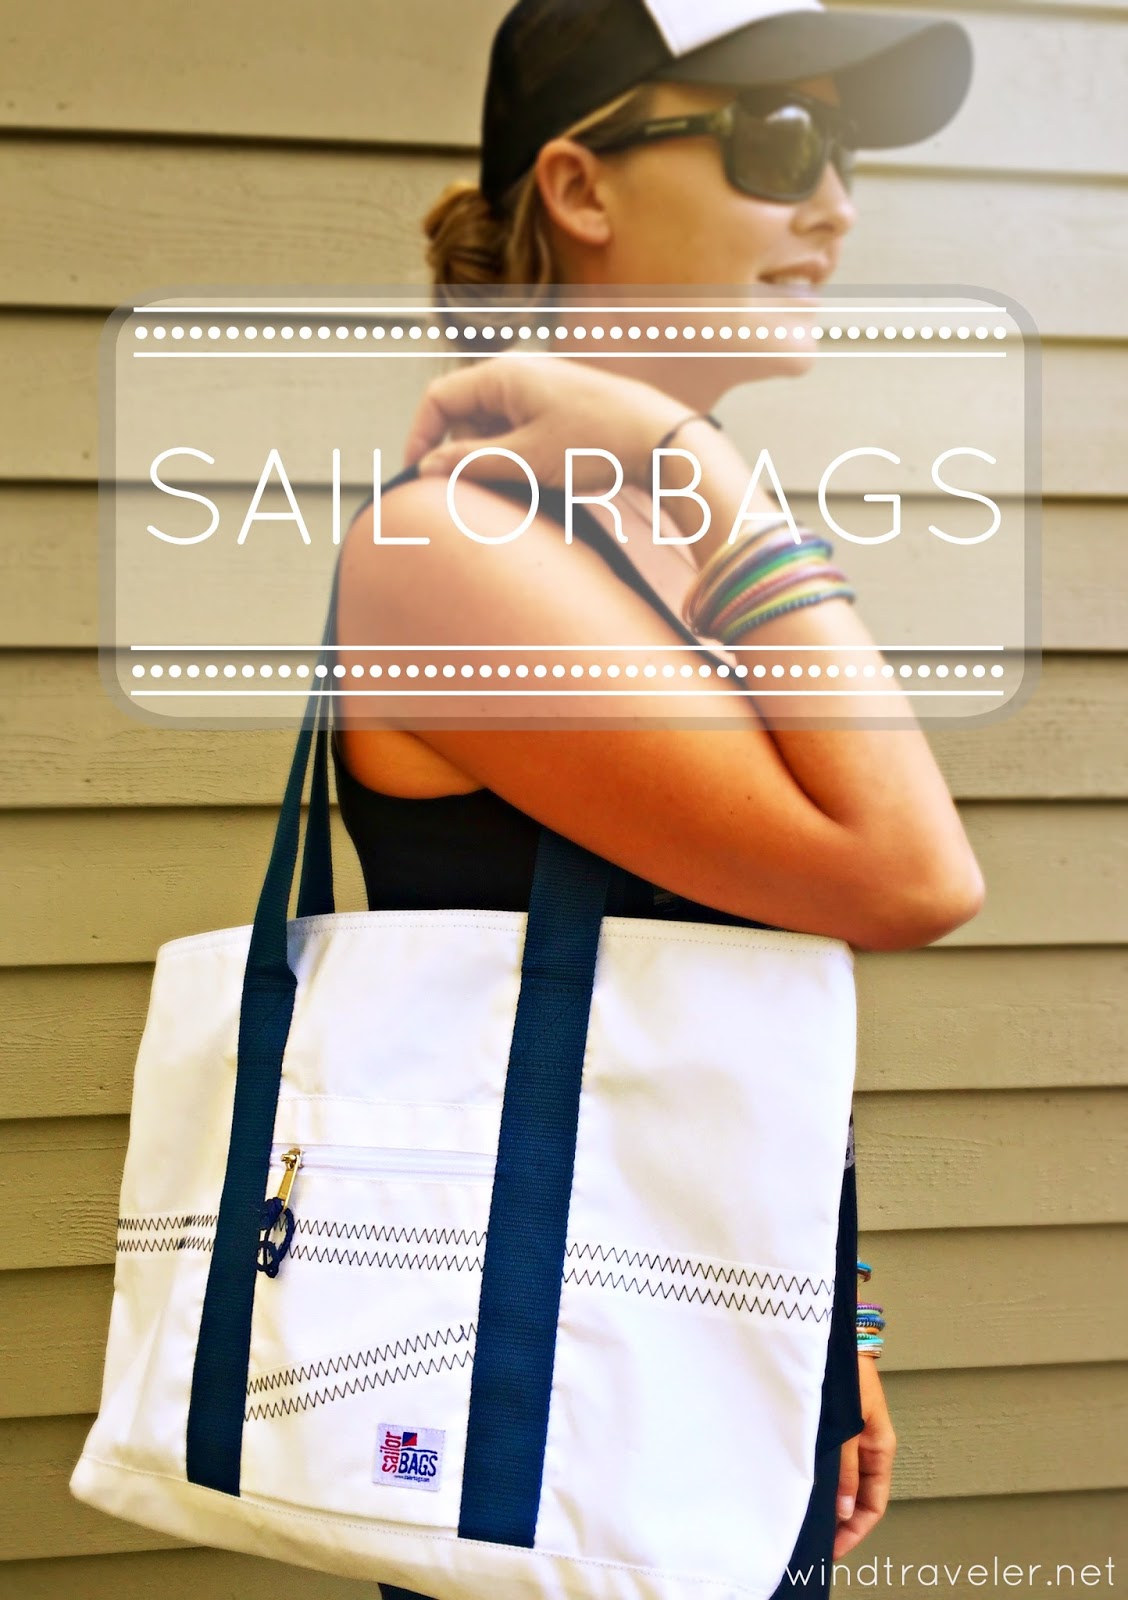 Windtraveler: Sailorbags: A Bag for Every Sailor